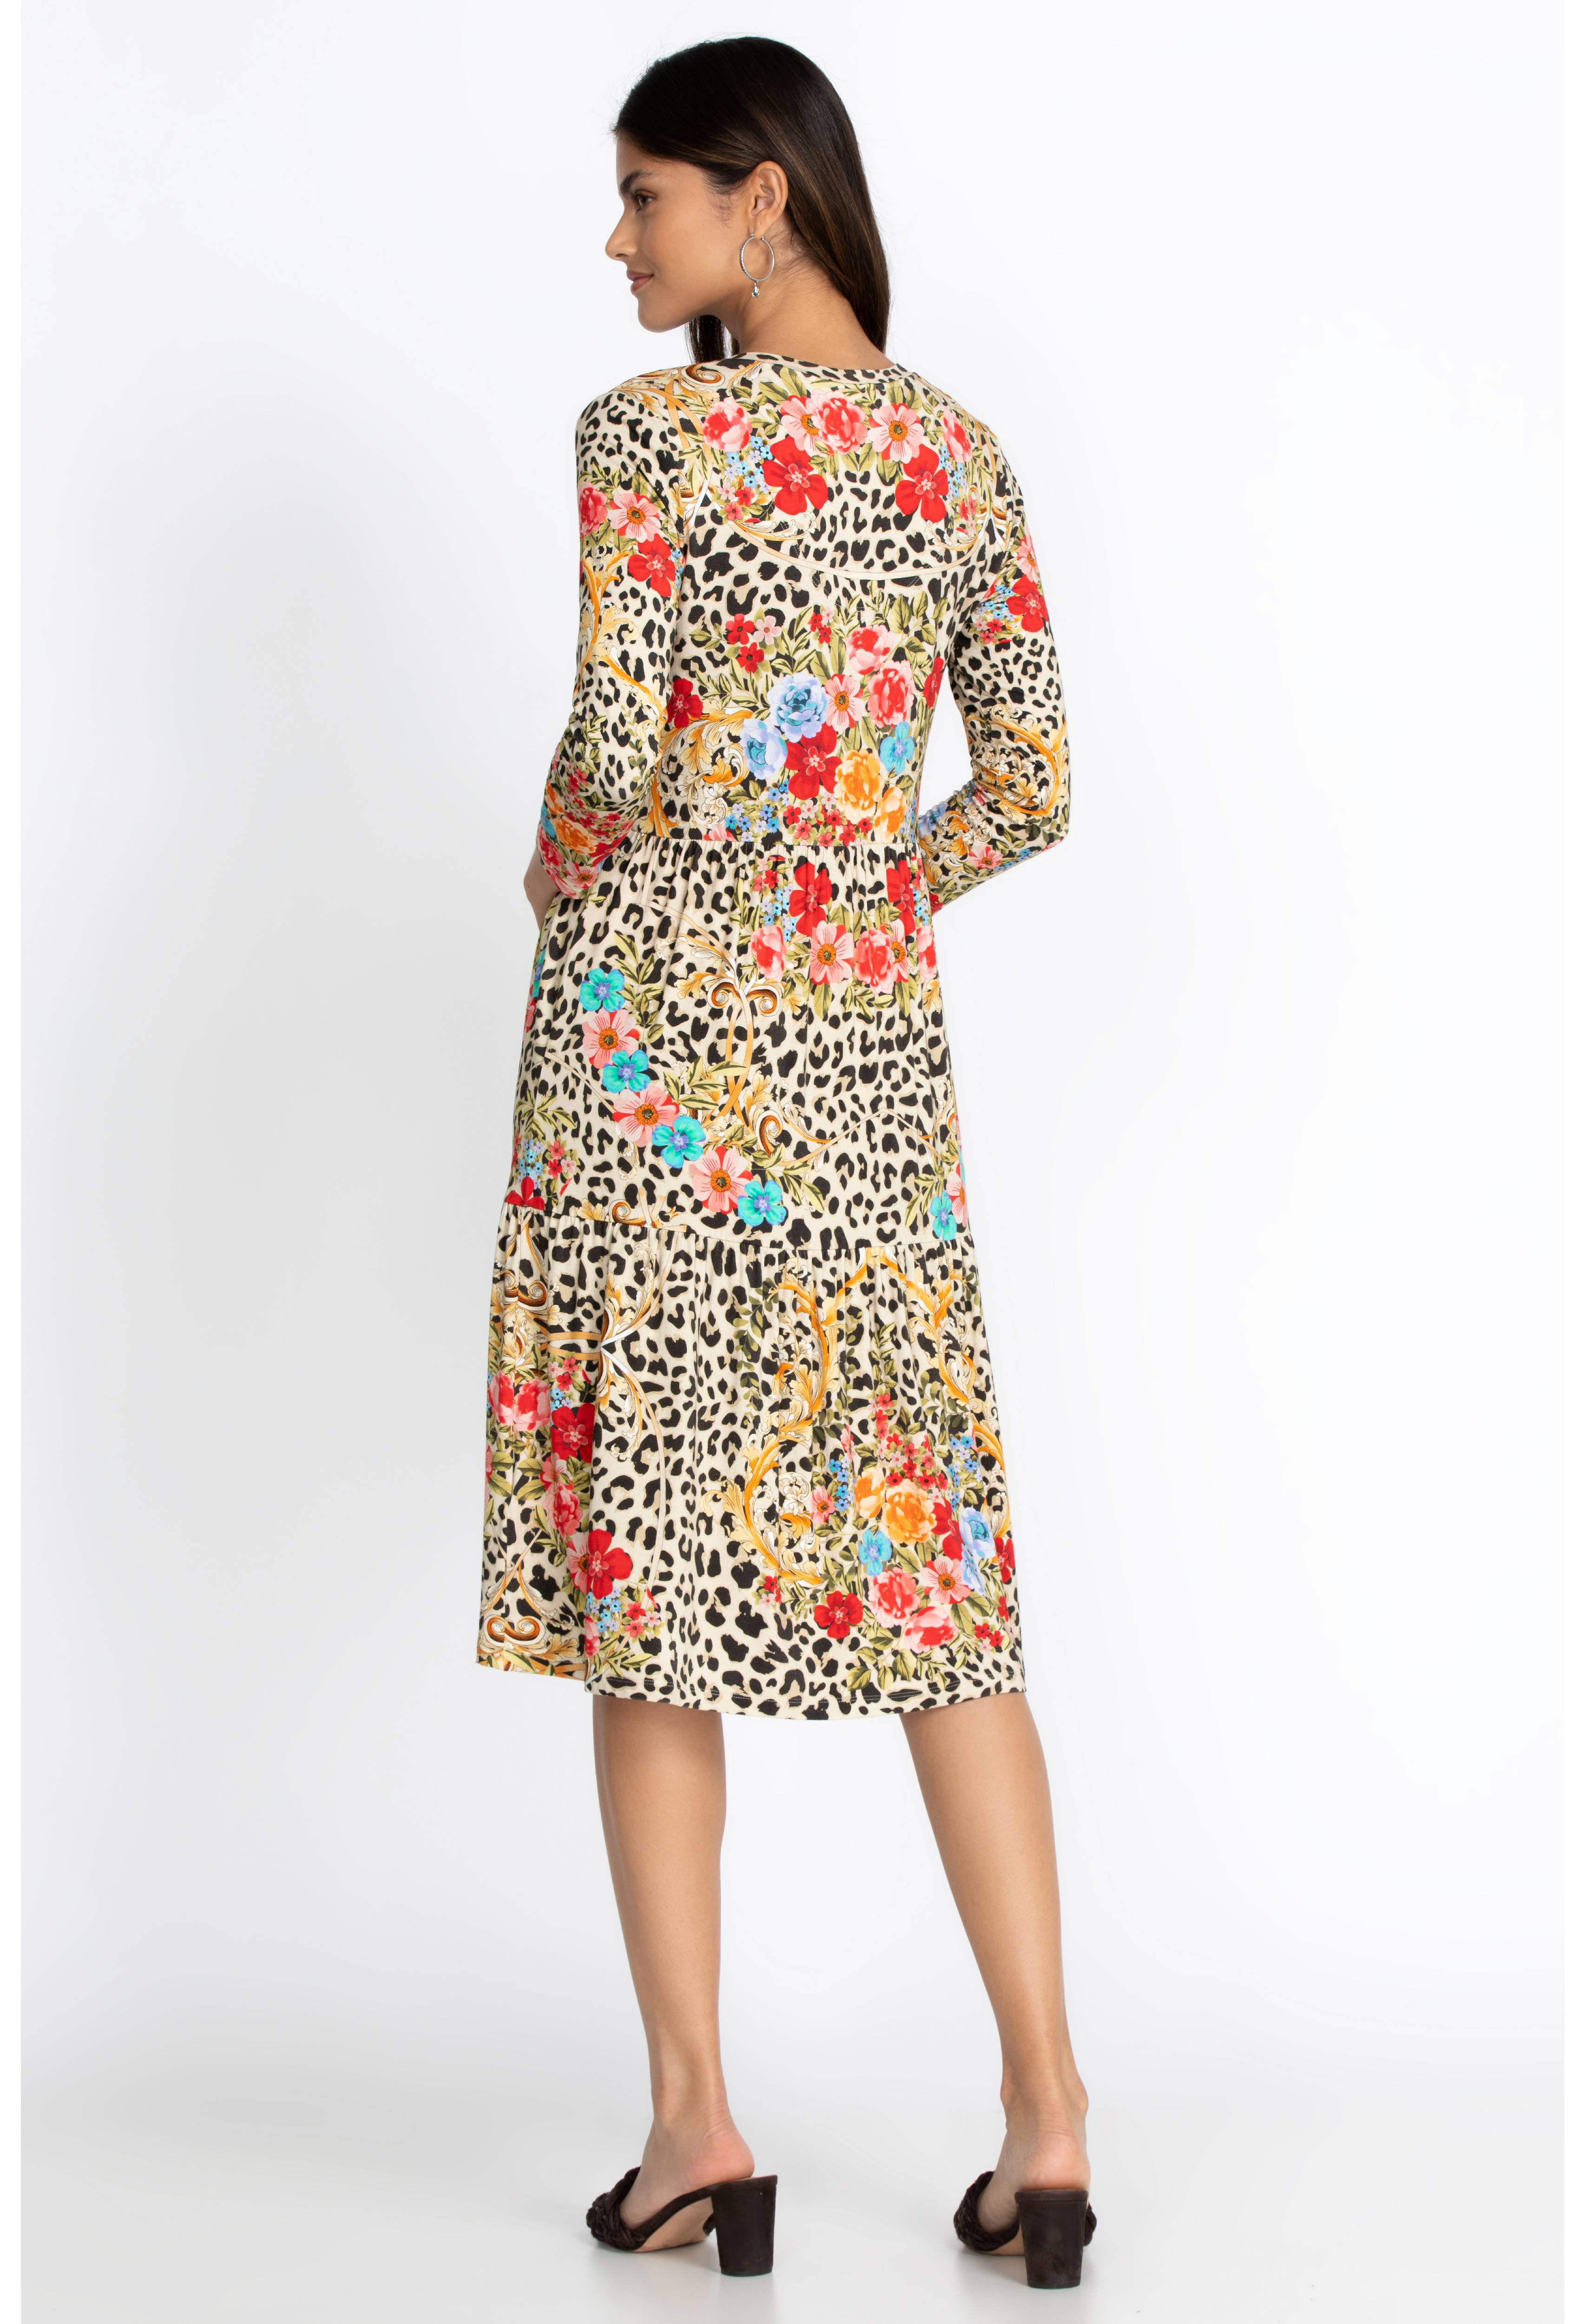 Cheetah Tiered Tea Length Dress, , large image number 3